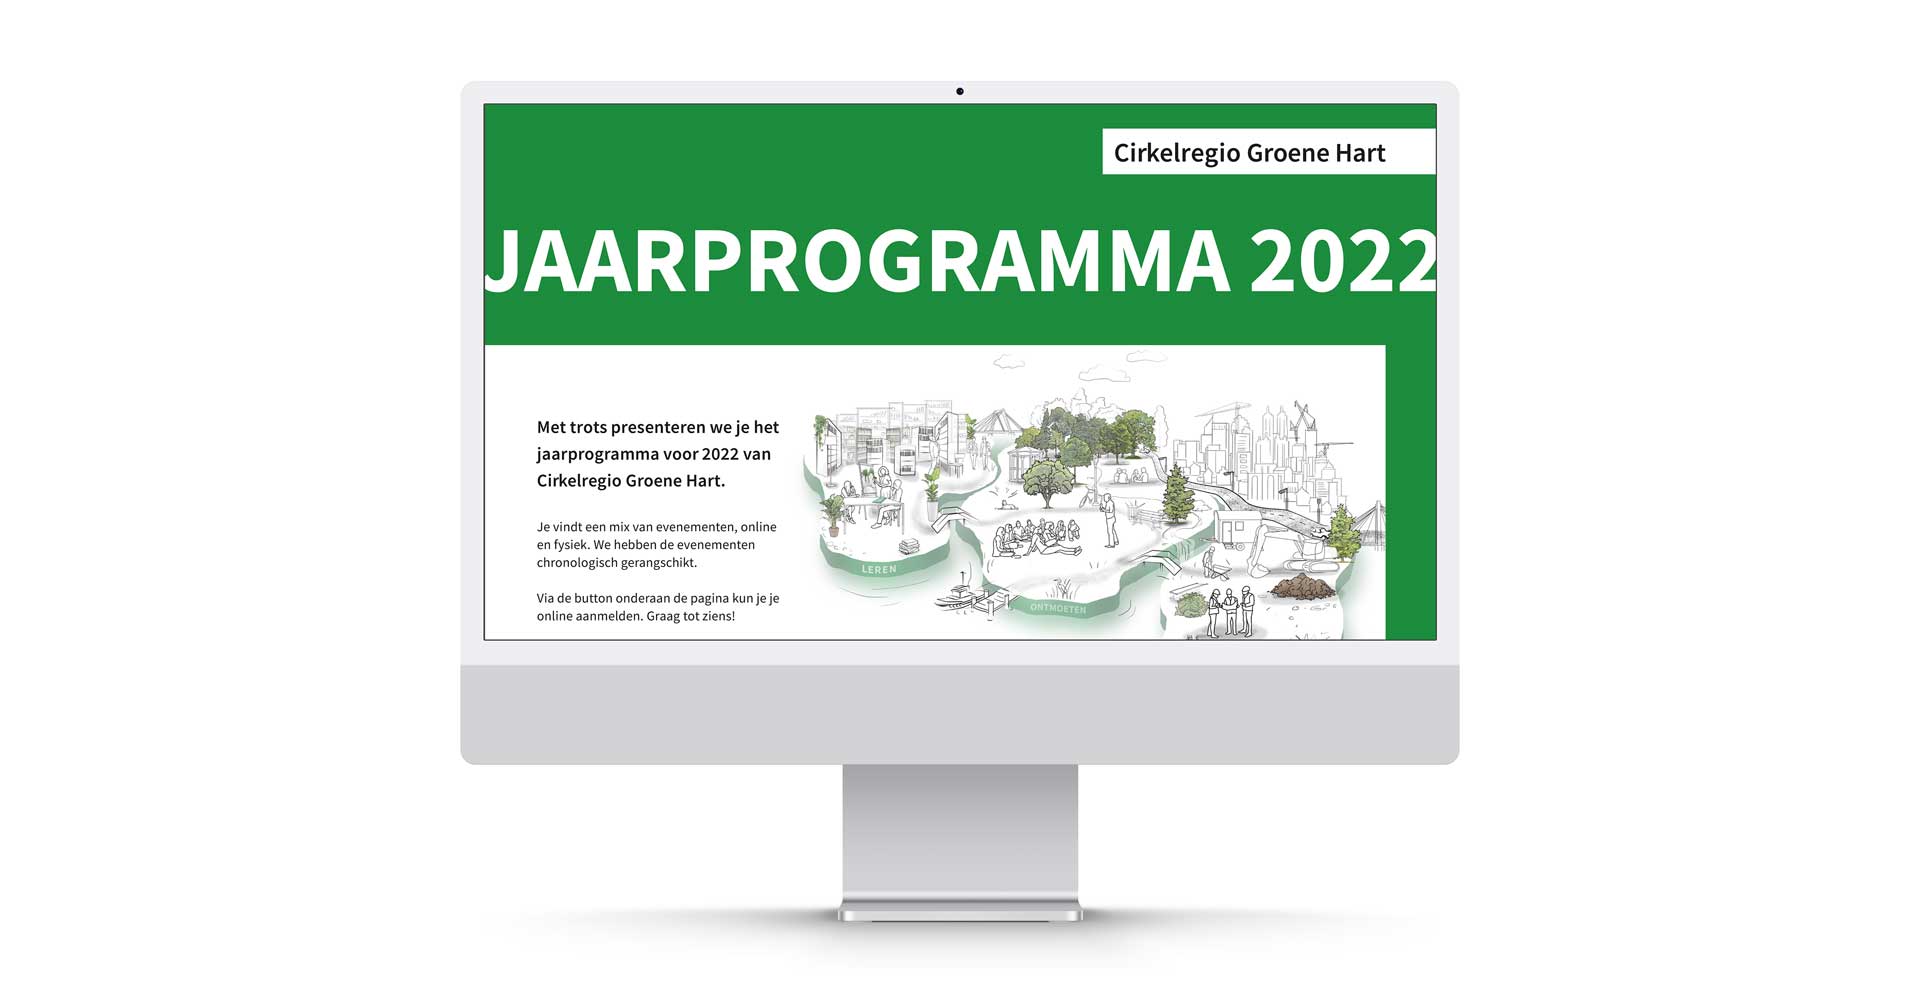 Jaarprogramma 2022 Cirkelregio Groene Hart